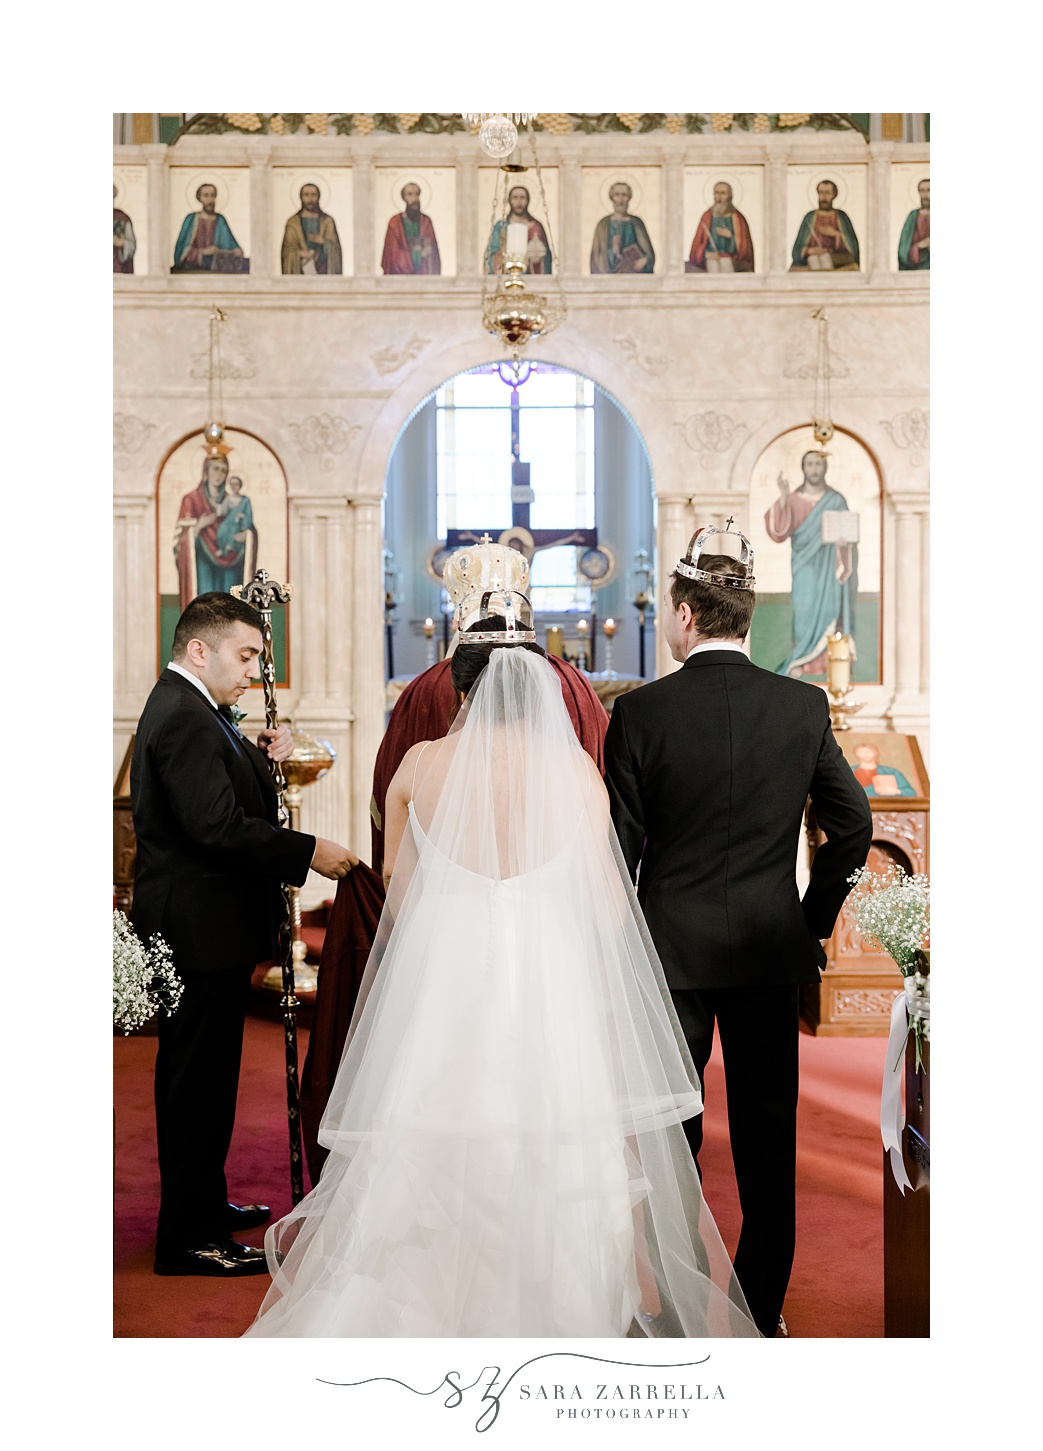 crowning during traditional Greek Orthodox ceremony inside Saint Mary Antiochian church